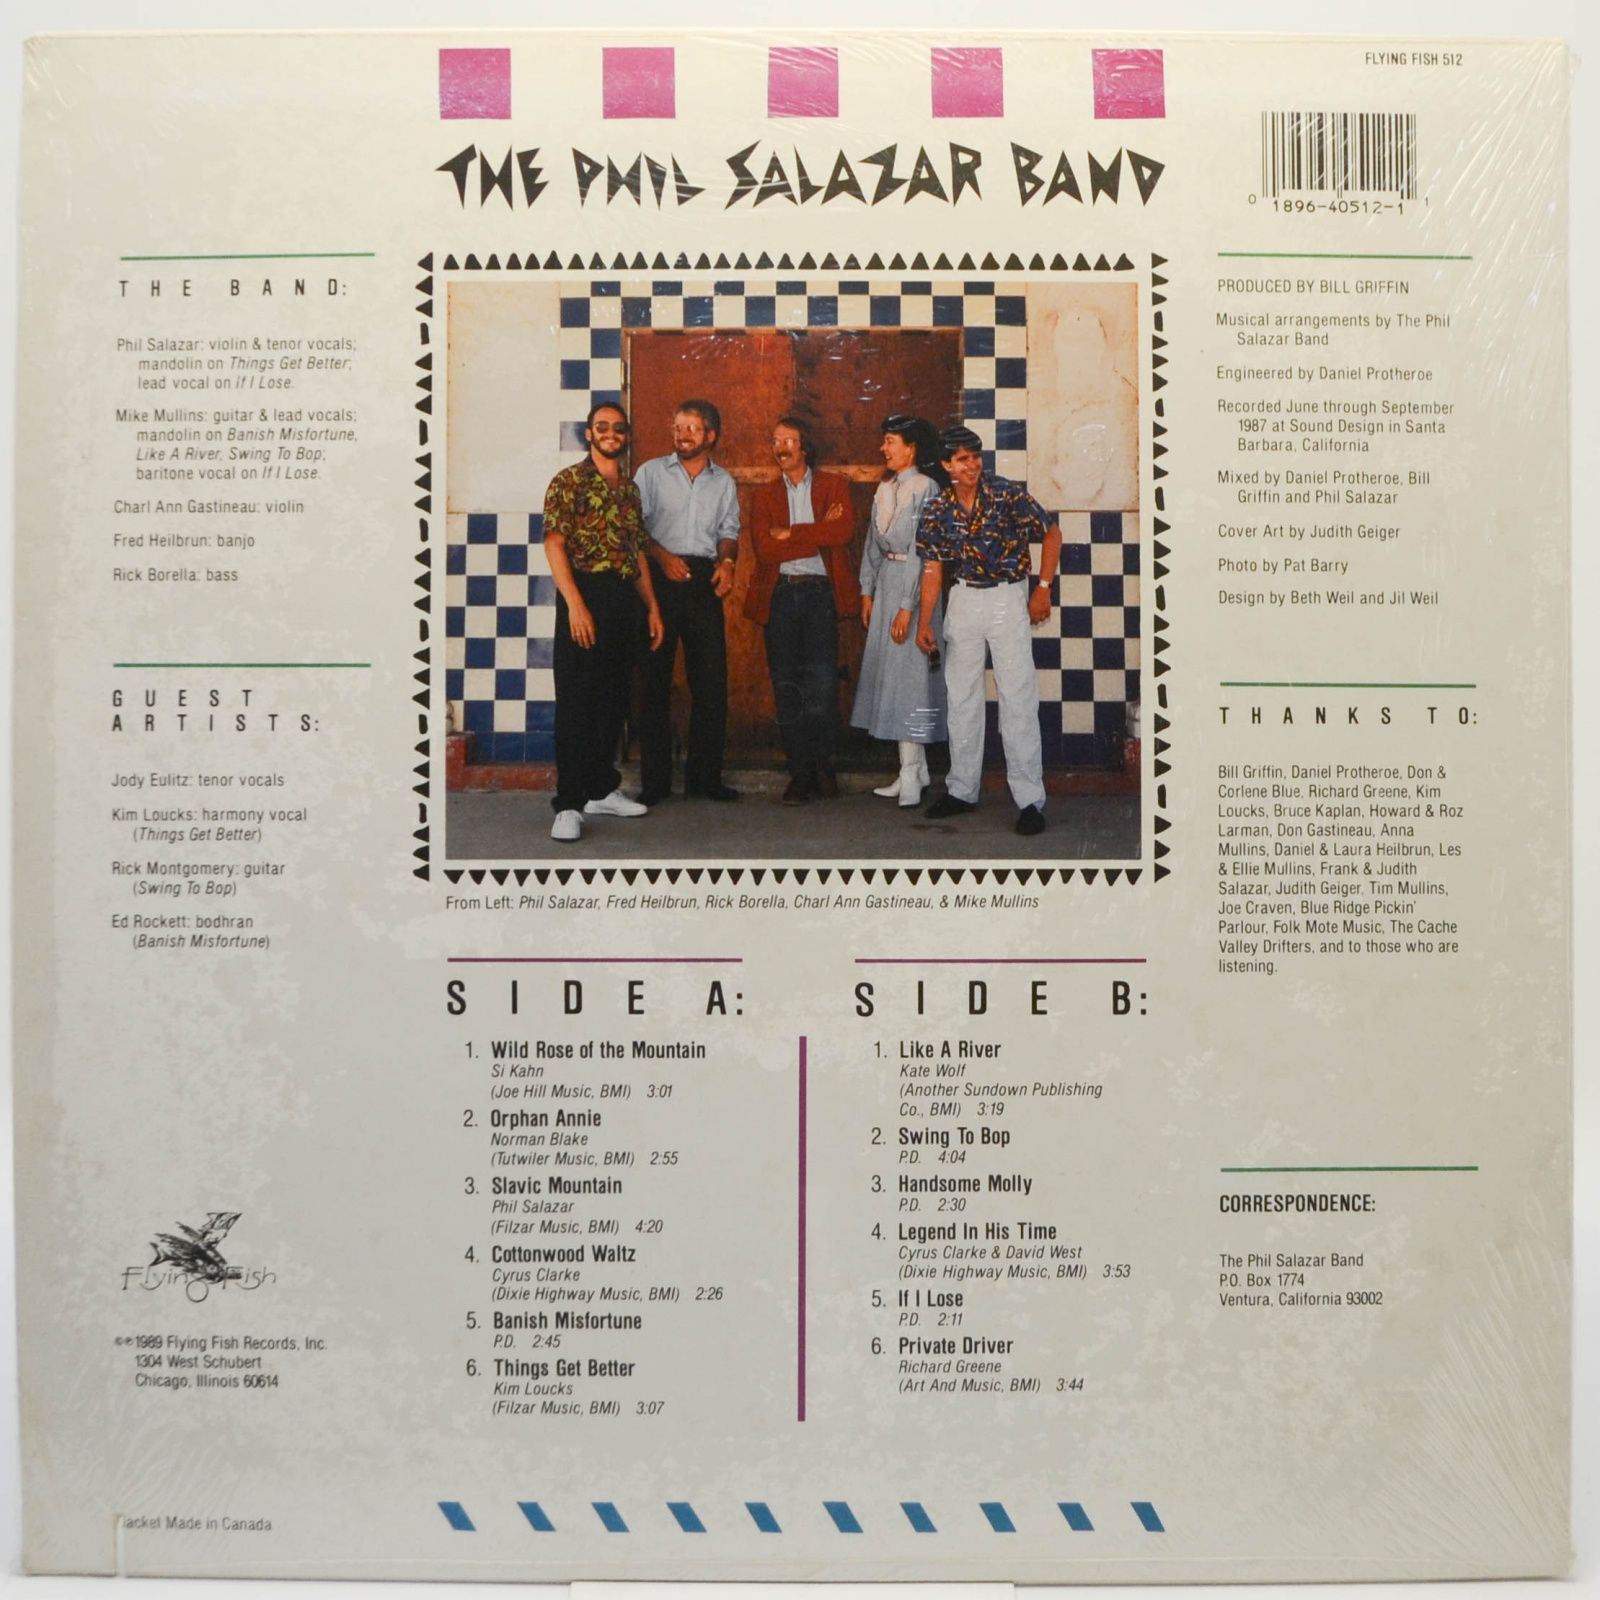 Phil Salazar Band — The Phil Salazar Band, 1989